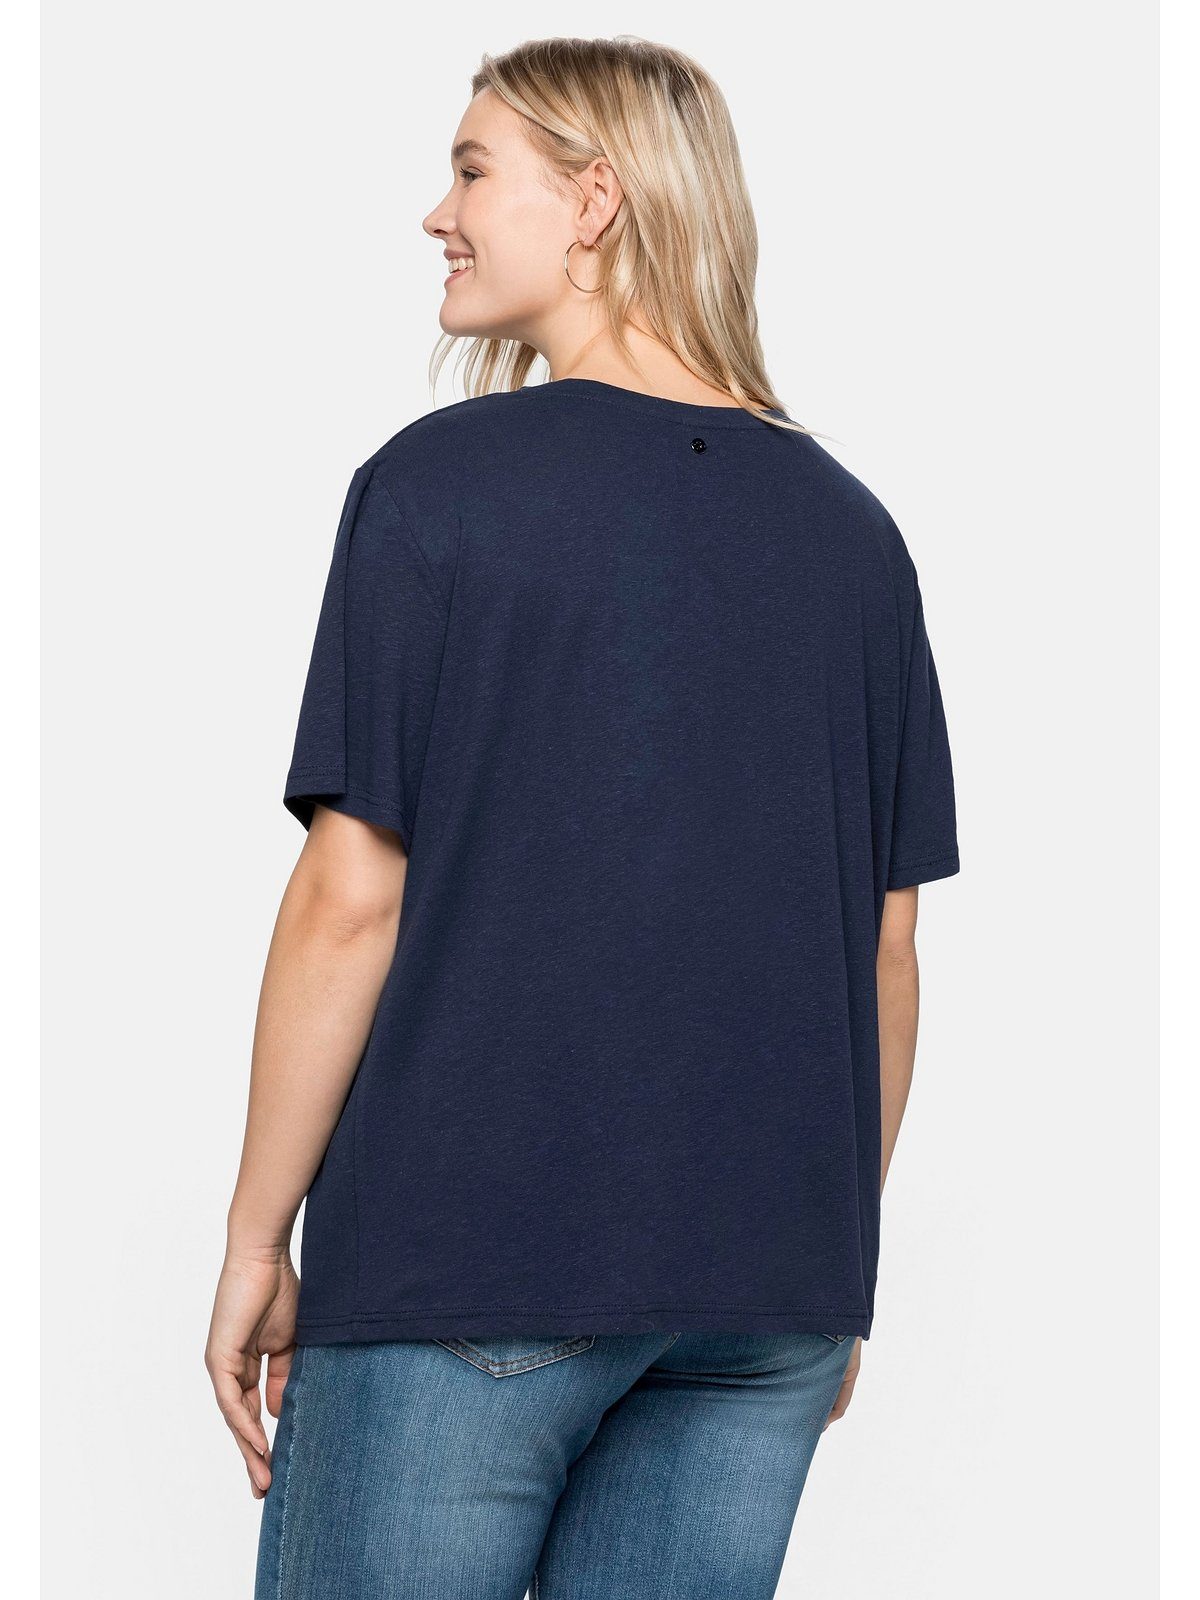 Sheego T-Shirt Große Größen aus marine edlem Leinen-Viskose-Mix